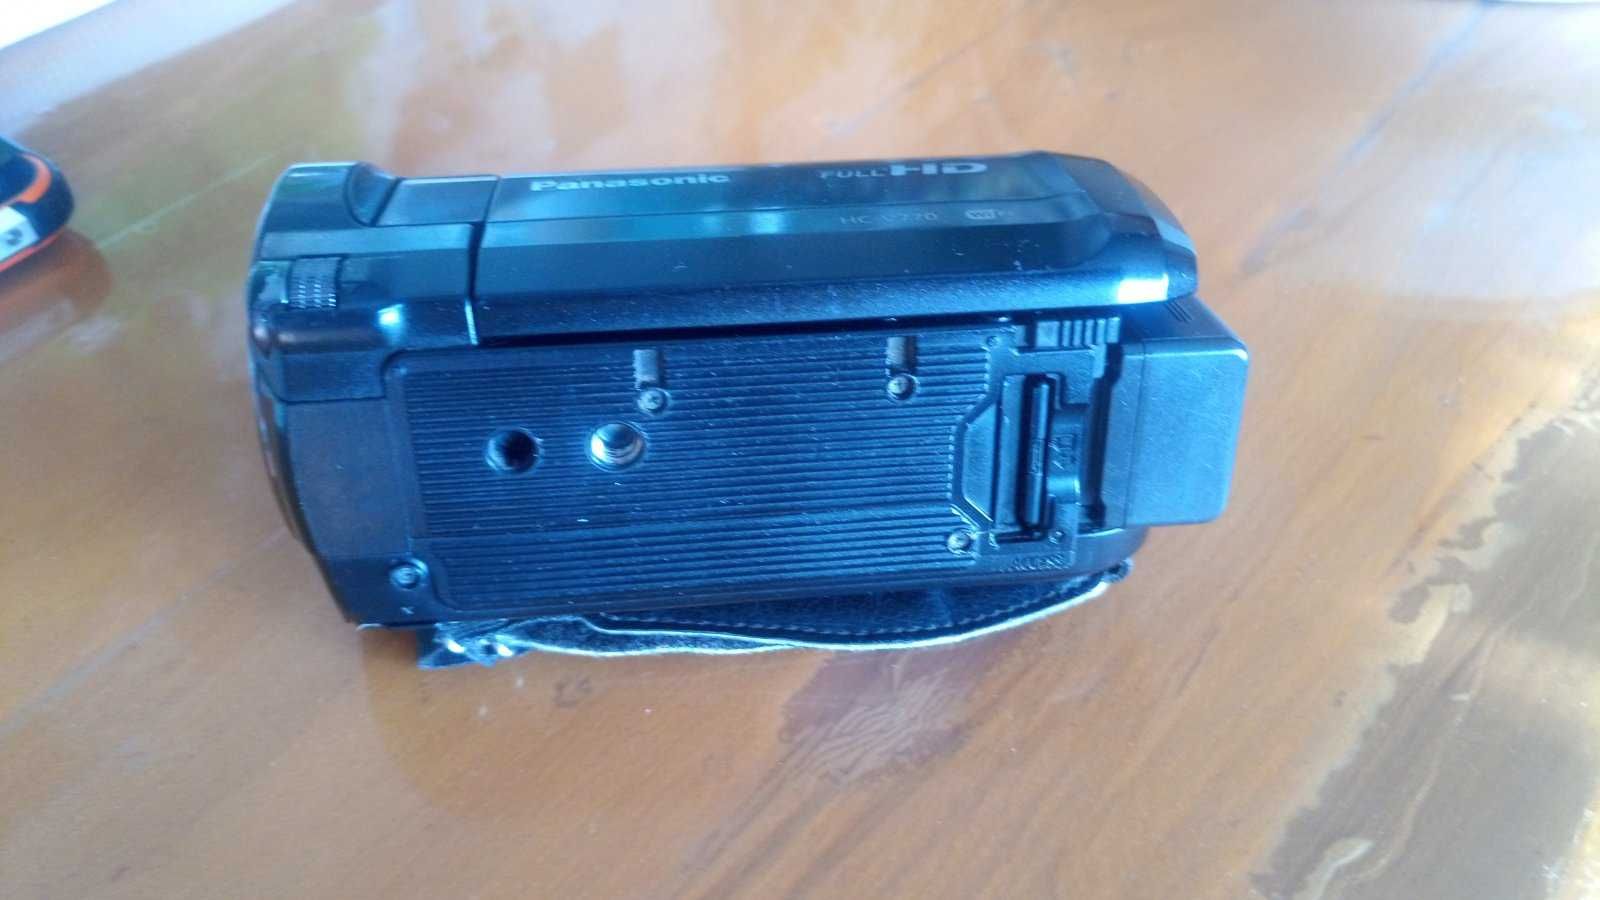 Відеокамера Panasonic HC-V770